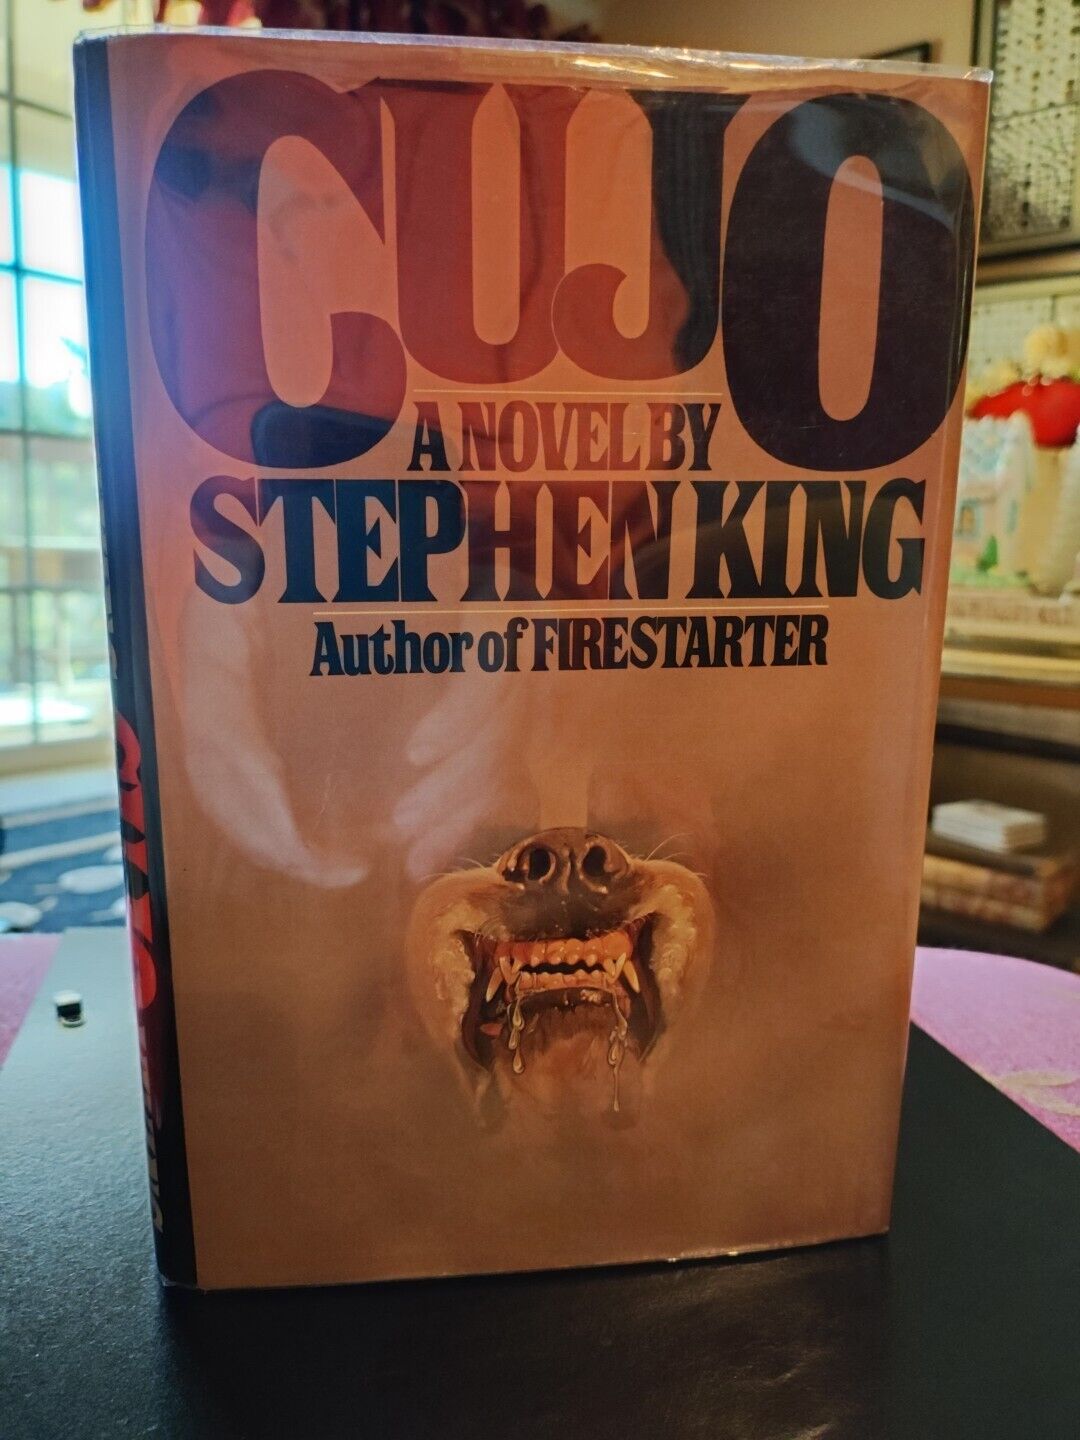 CUJO by STEPHEN KING ~ 1981 Viking hardcover. True 1st Edition 1st Printing.